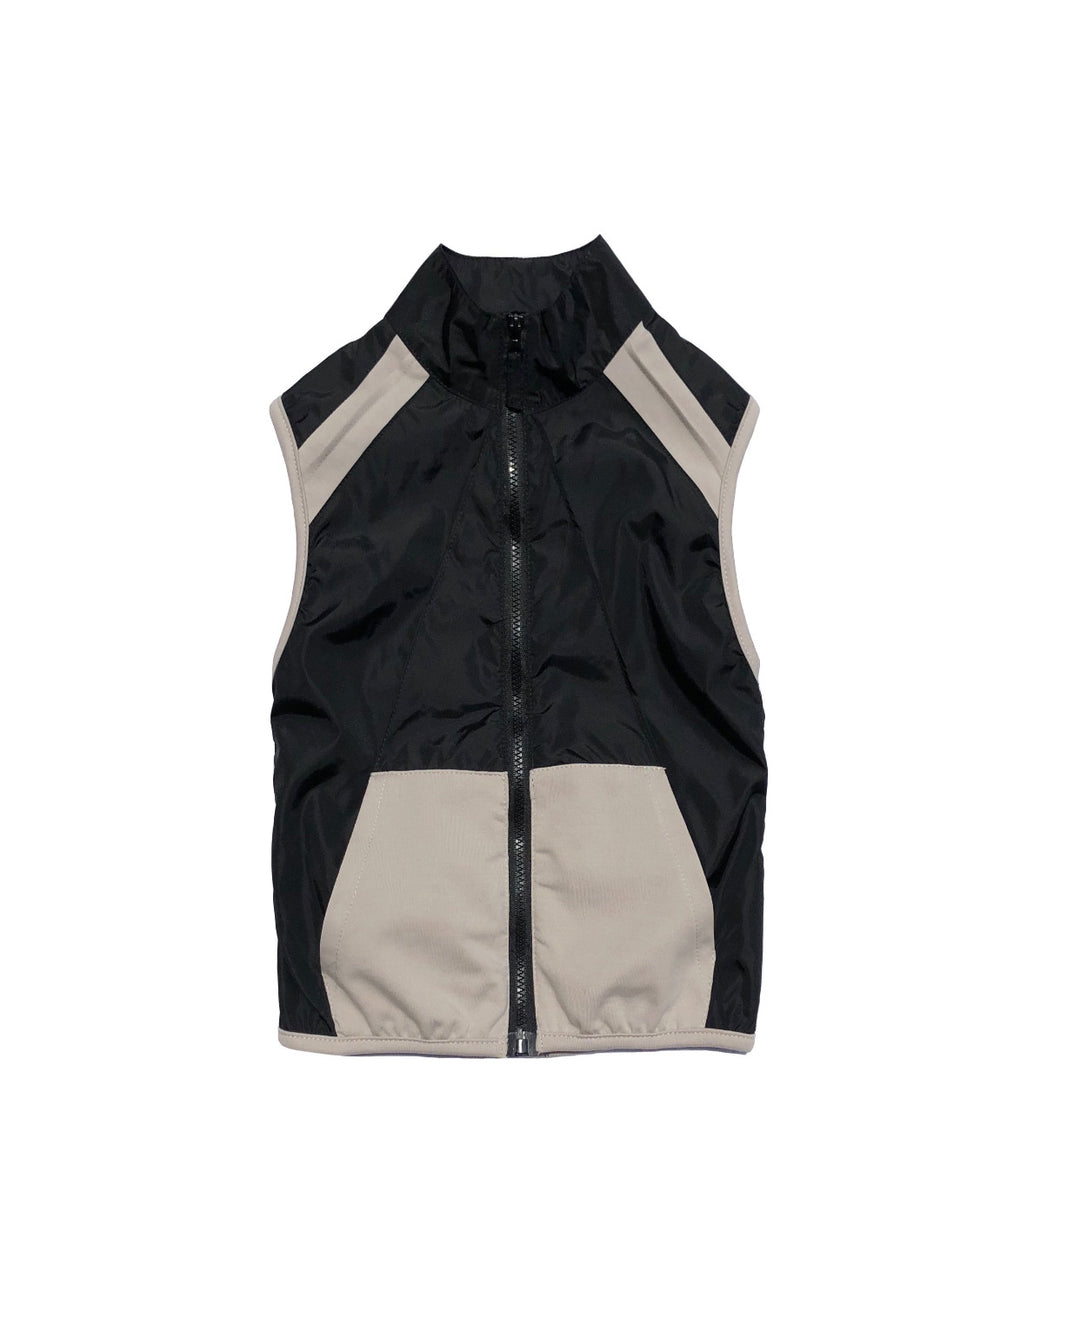 Luxe sleeveless jacket. Boys sleeveless Shell Zip Top stone/black